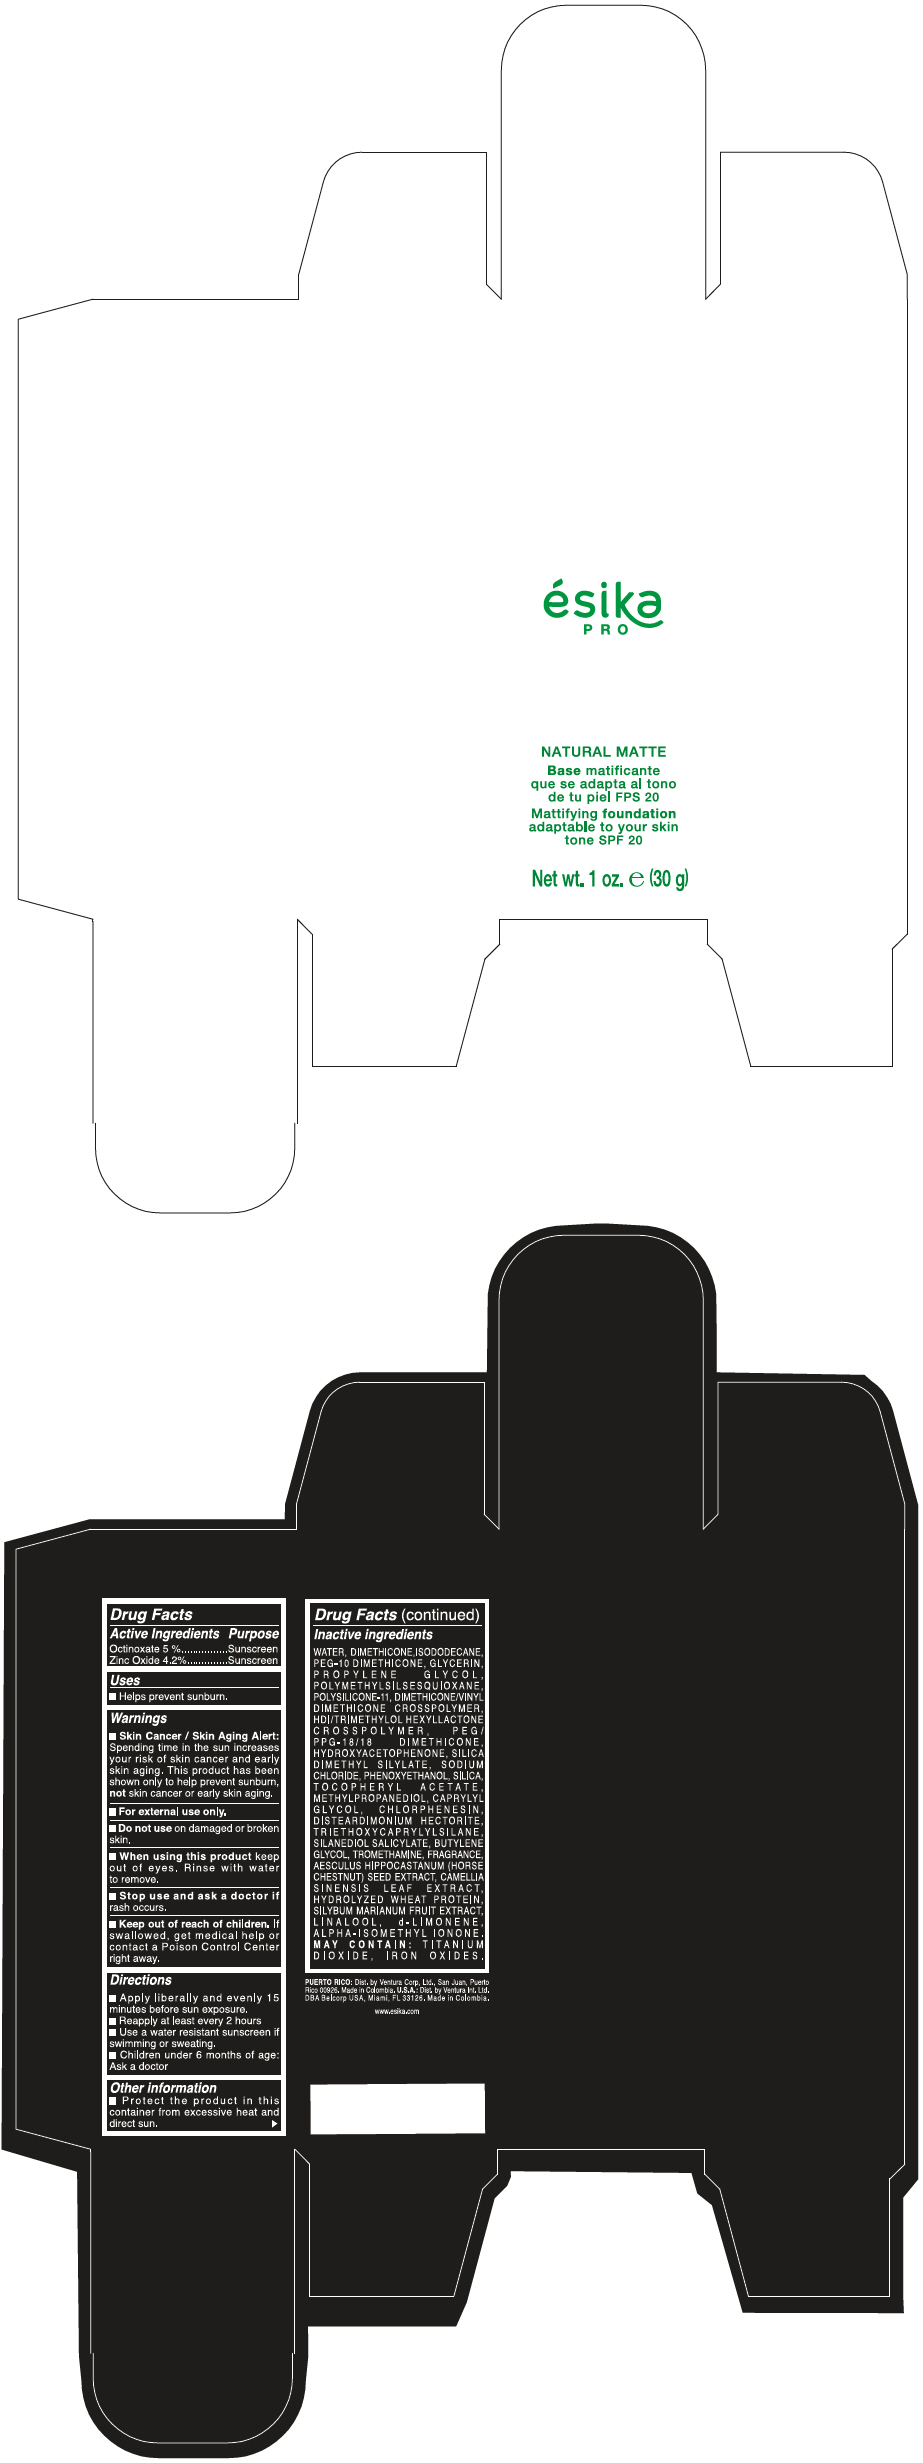 PRINCIPAL DISPLAY PANEL - 30 g Bottle Box - Claro 1/Beige